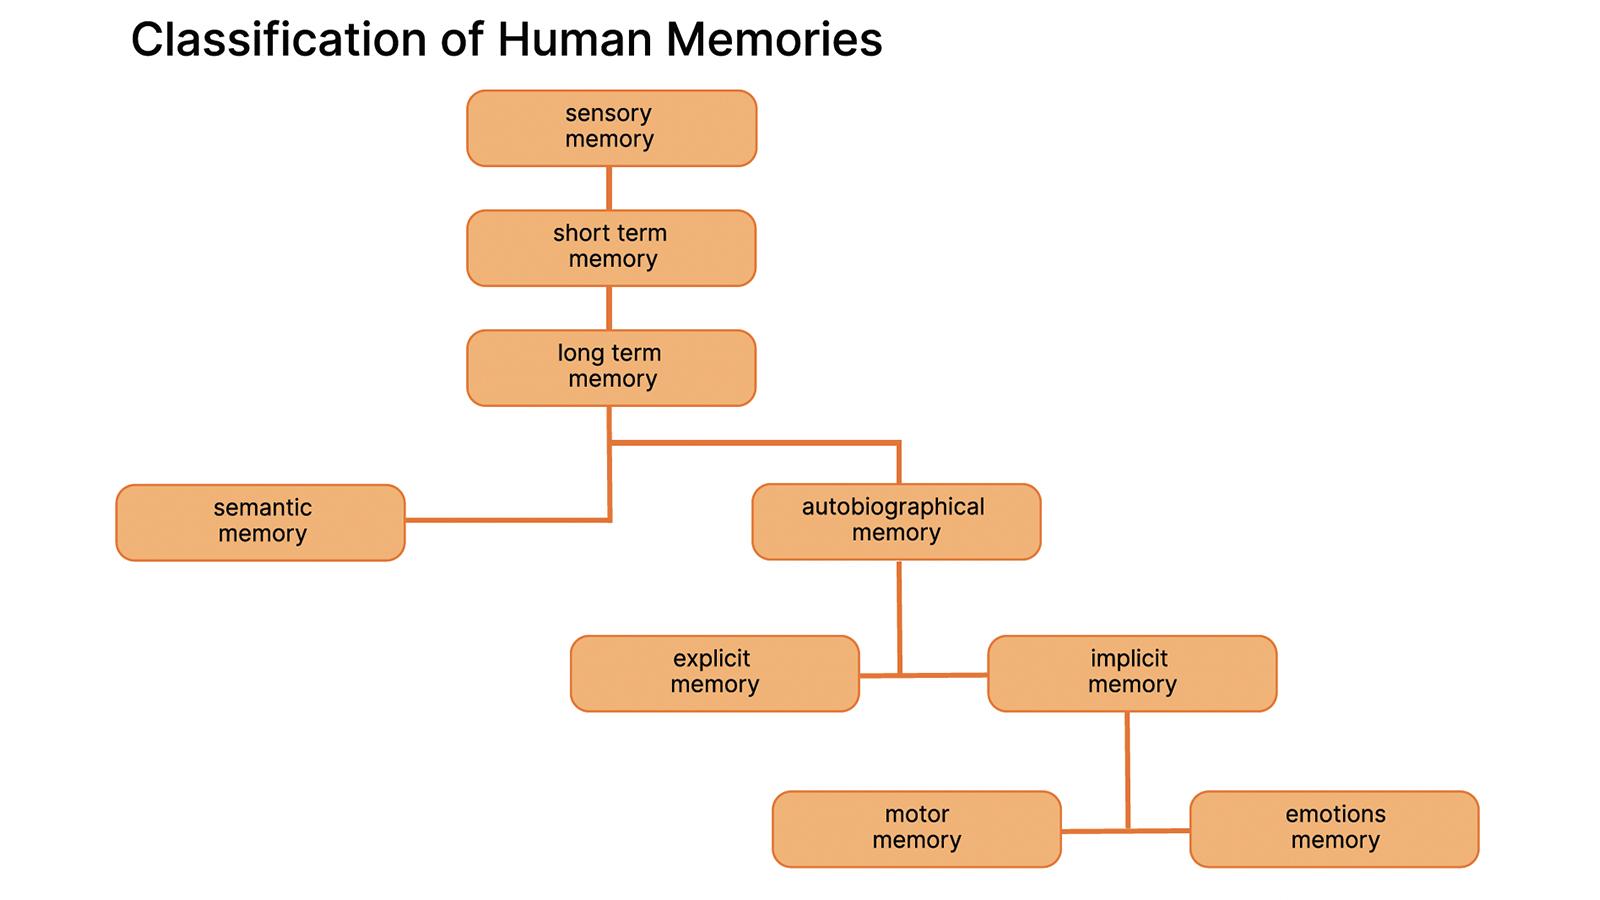 Tree chart depicting Classification of Human Memories